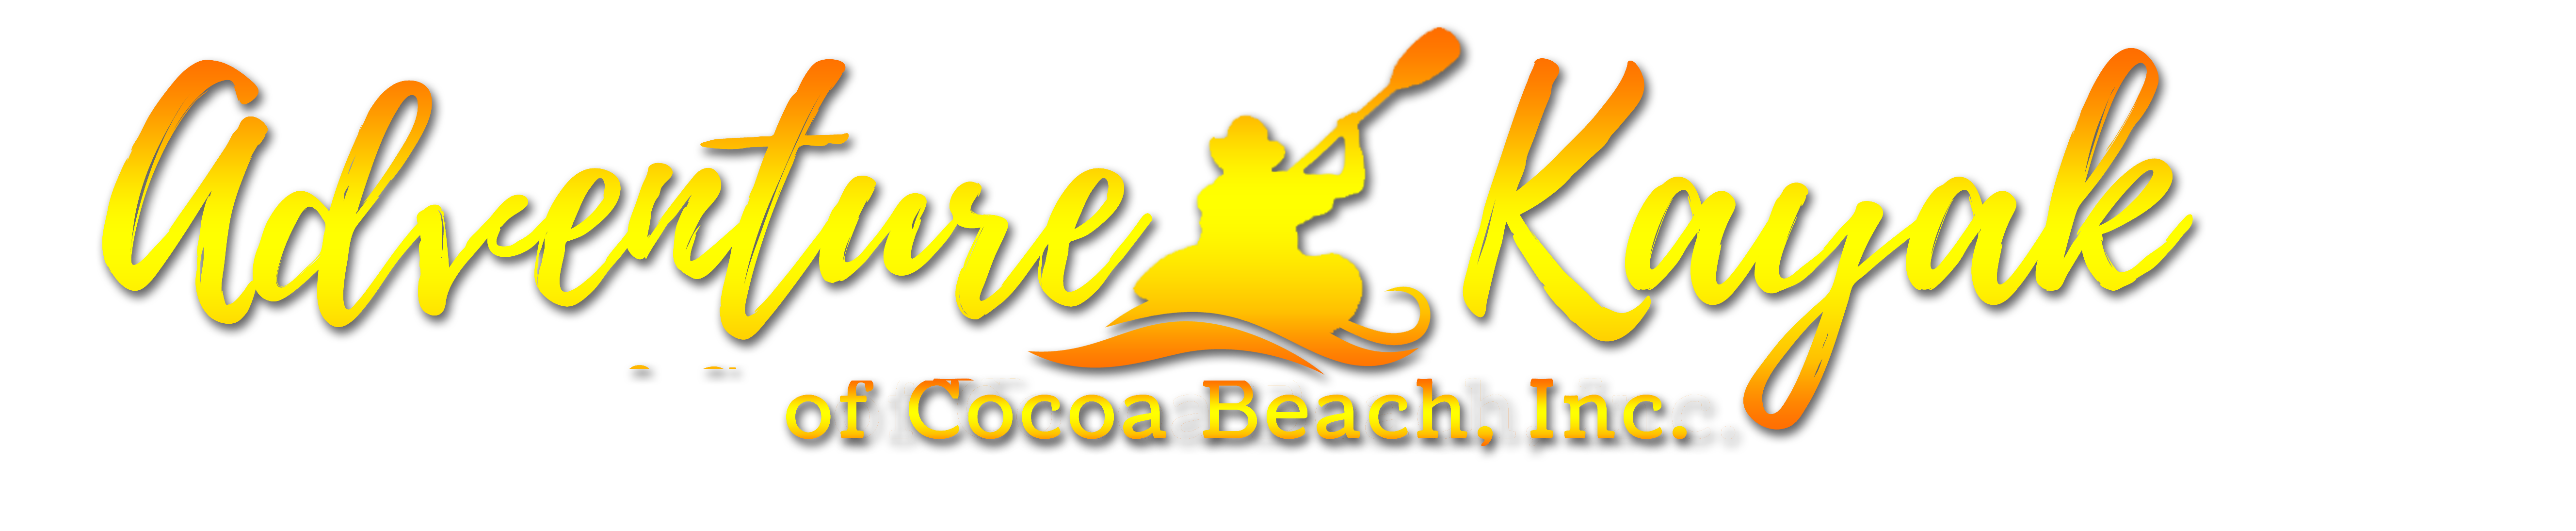 Adventure Kayak Tours of Cocoa Beach near Orlando